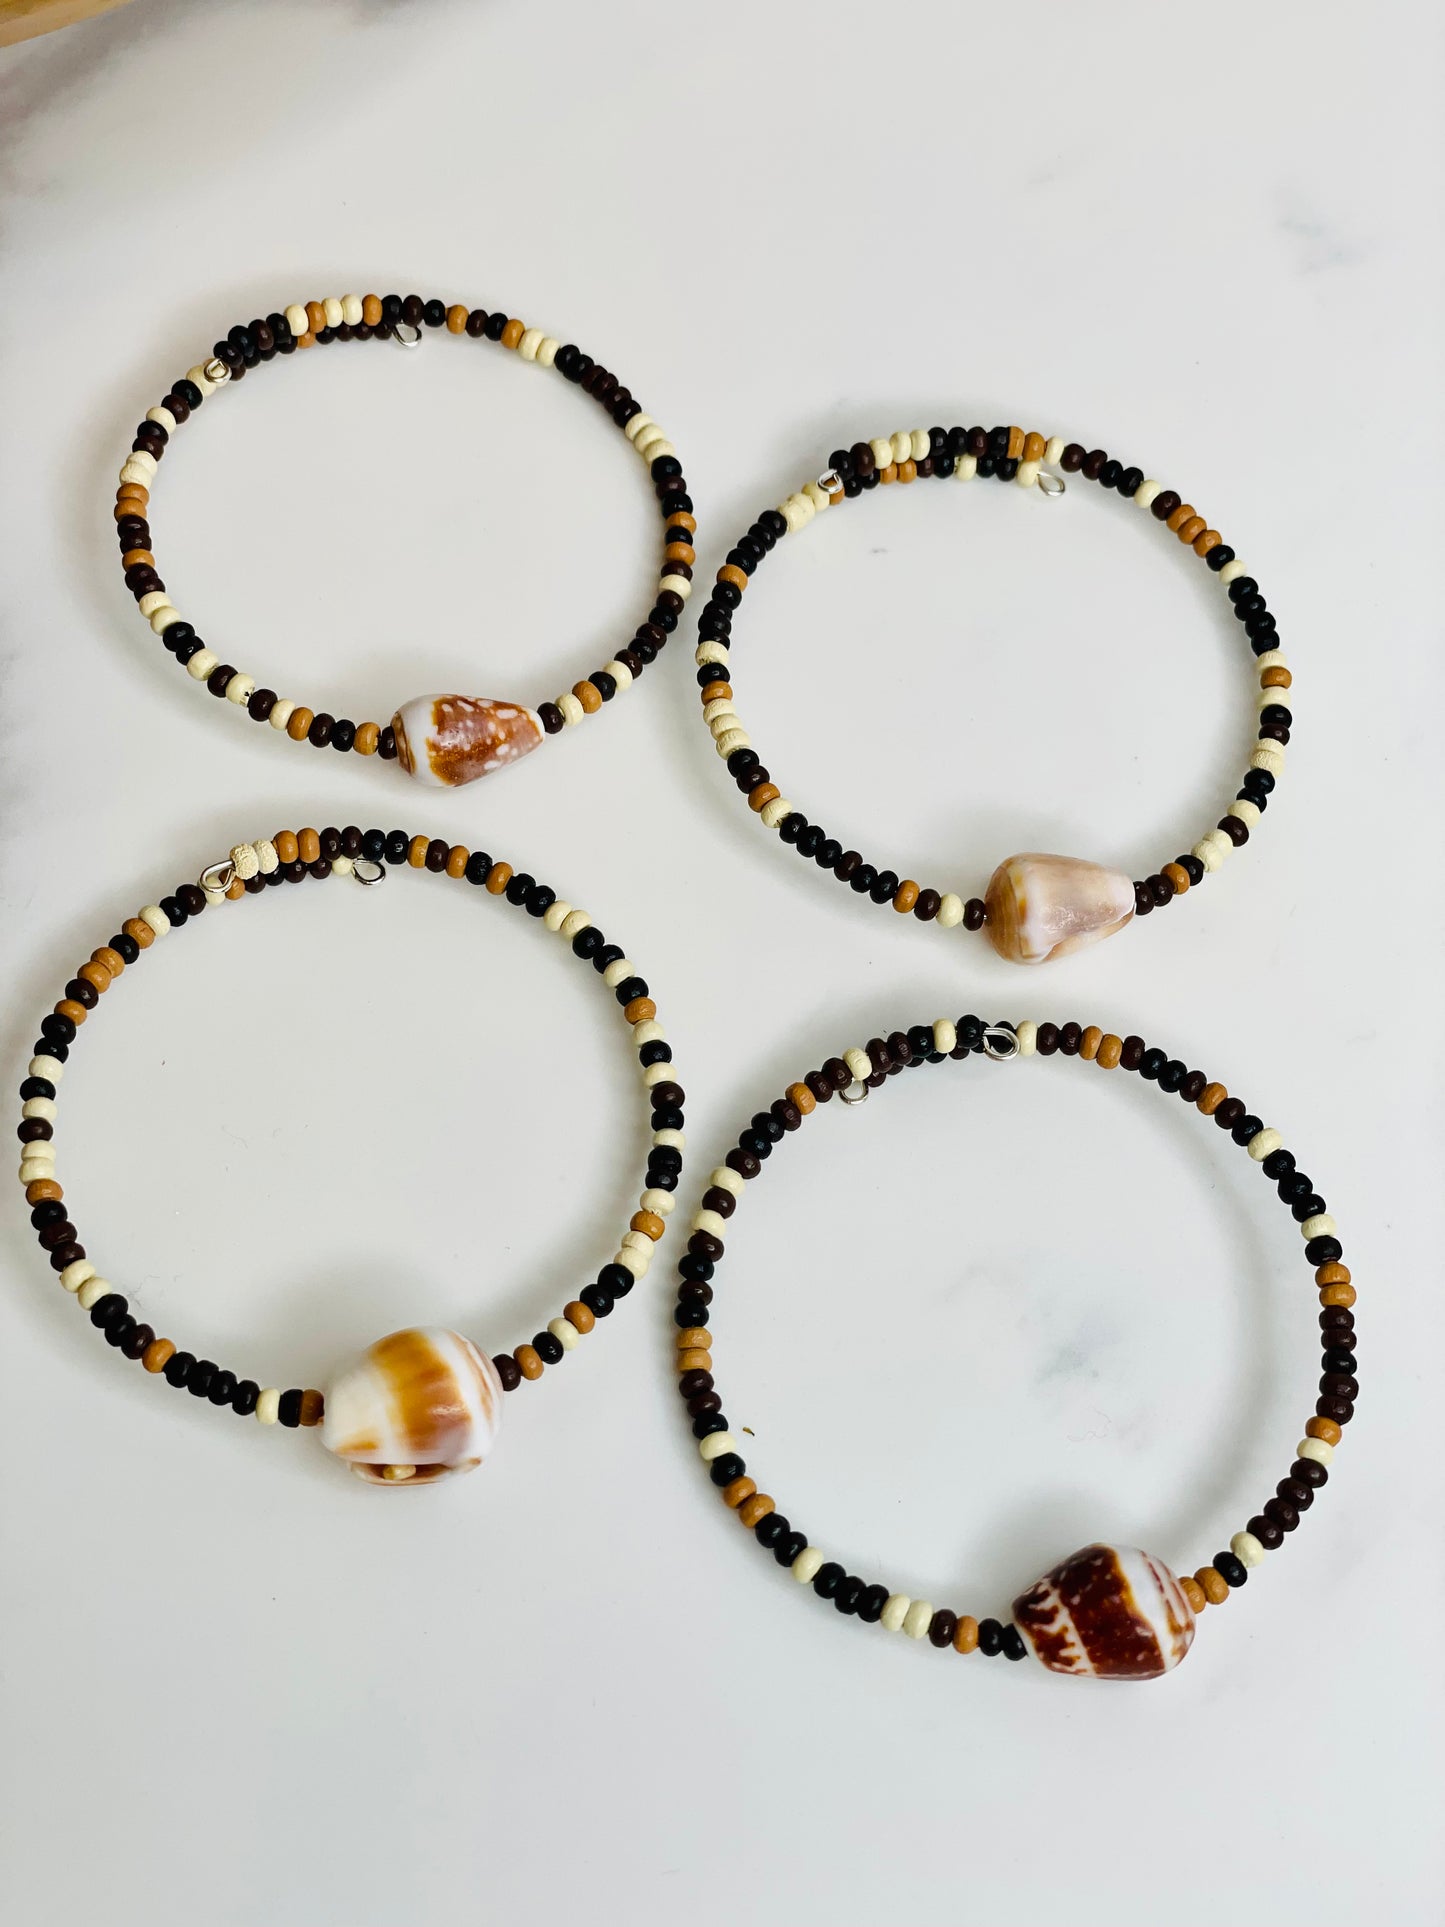 Cuff Bracelet Cone Shell Wood Beads